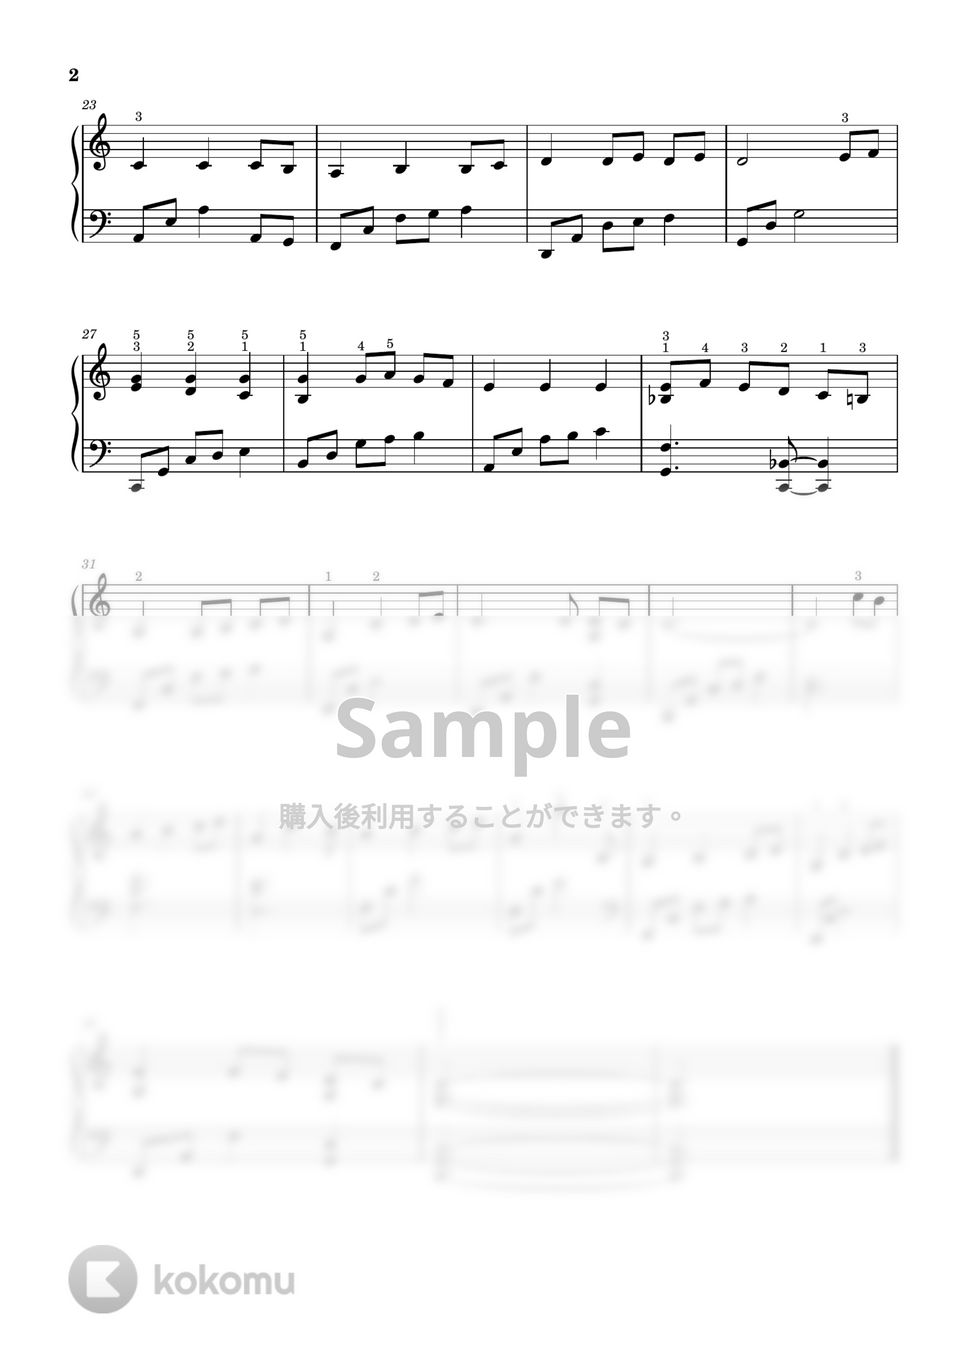 Hisaishi Joe(久石 讓) - いつも何度でも (C Key,easy ver.) by Hellopiano